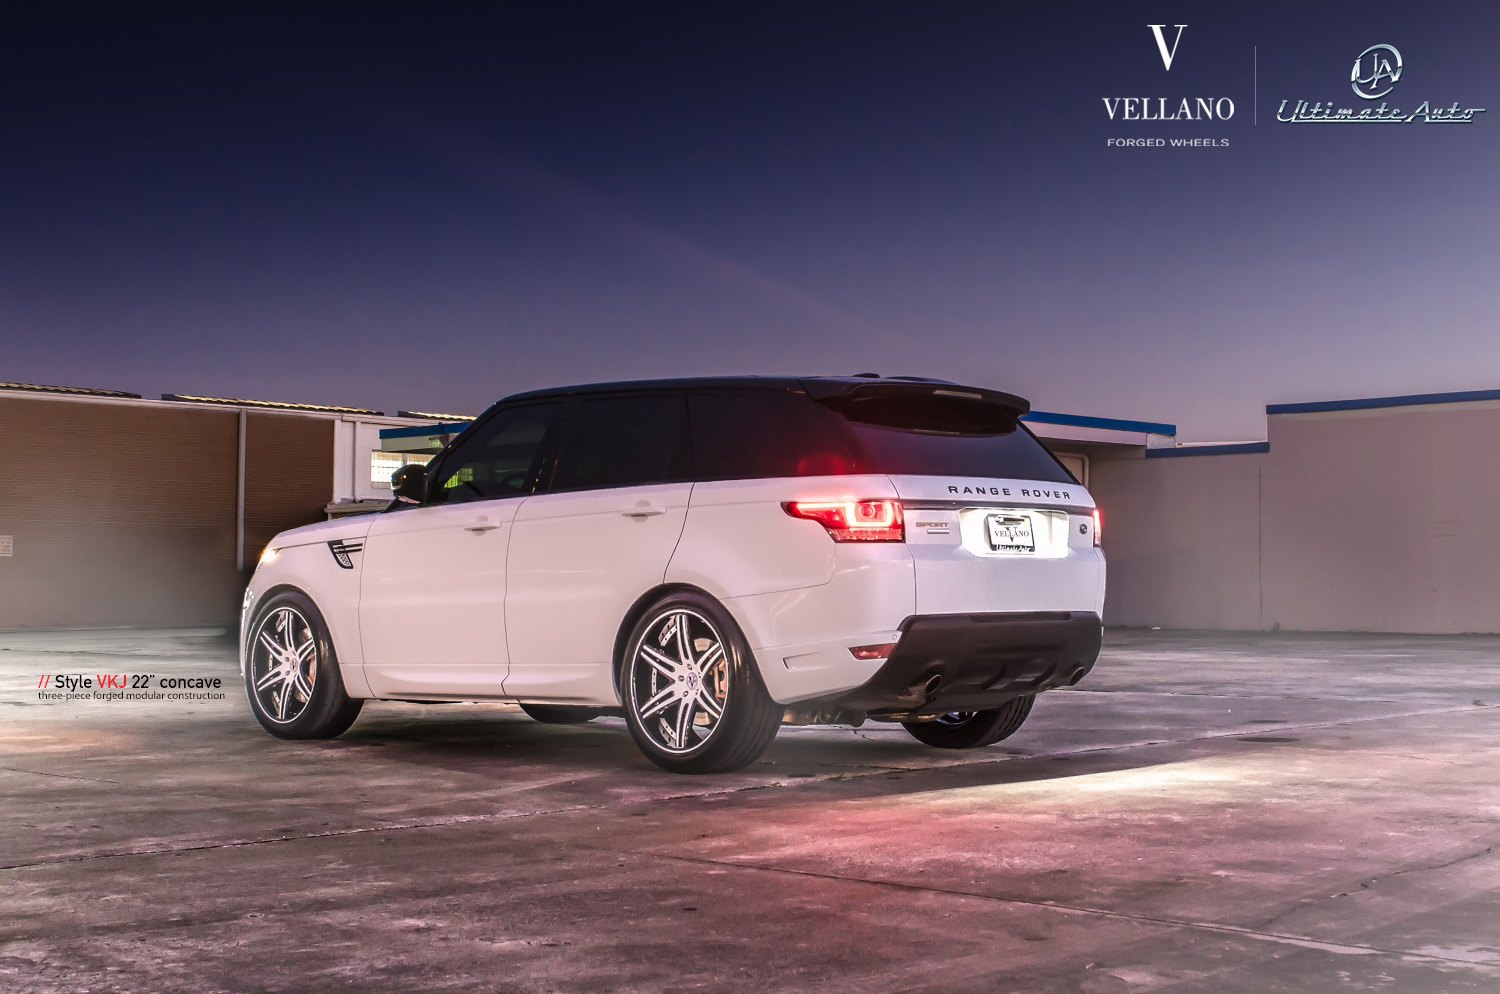 Roofline Spoiler with Light on White Range Rover Sport - Photo by Vellano